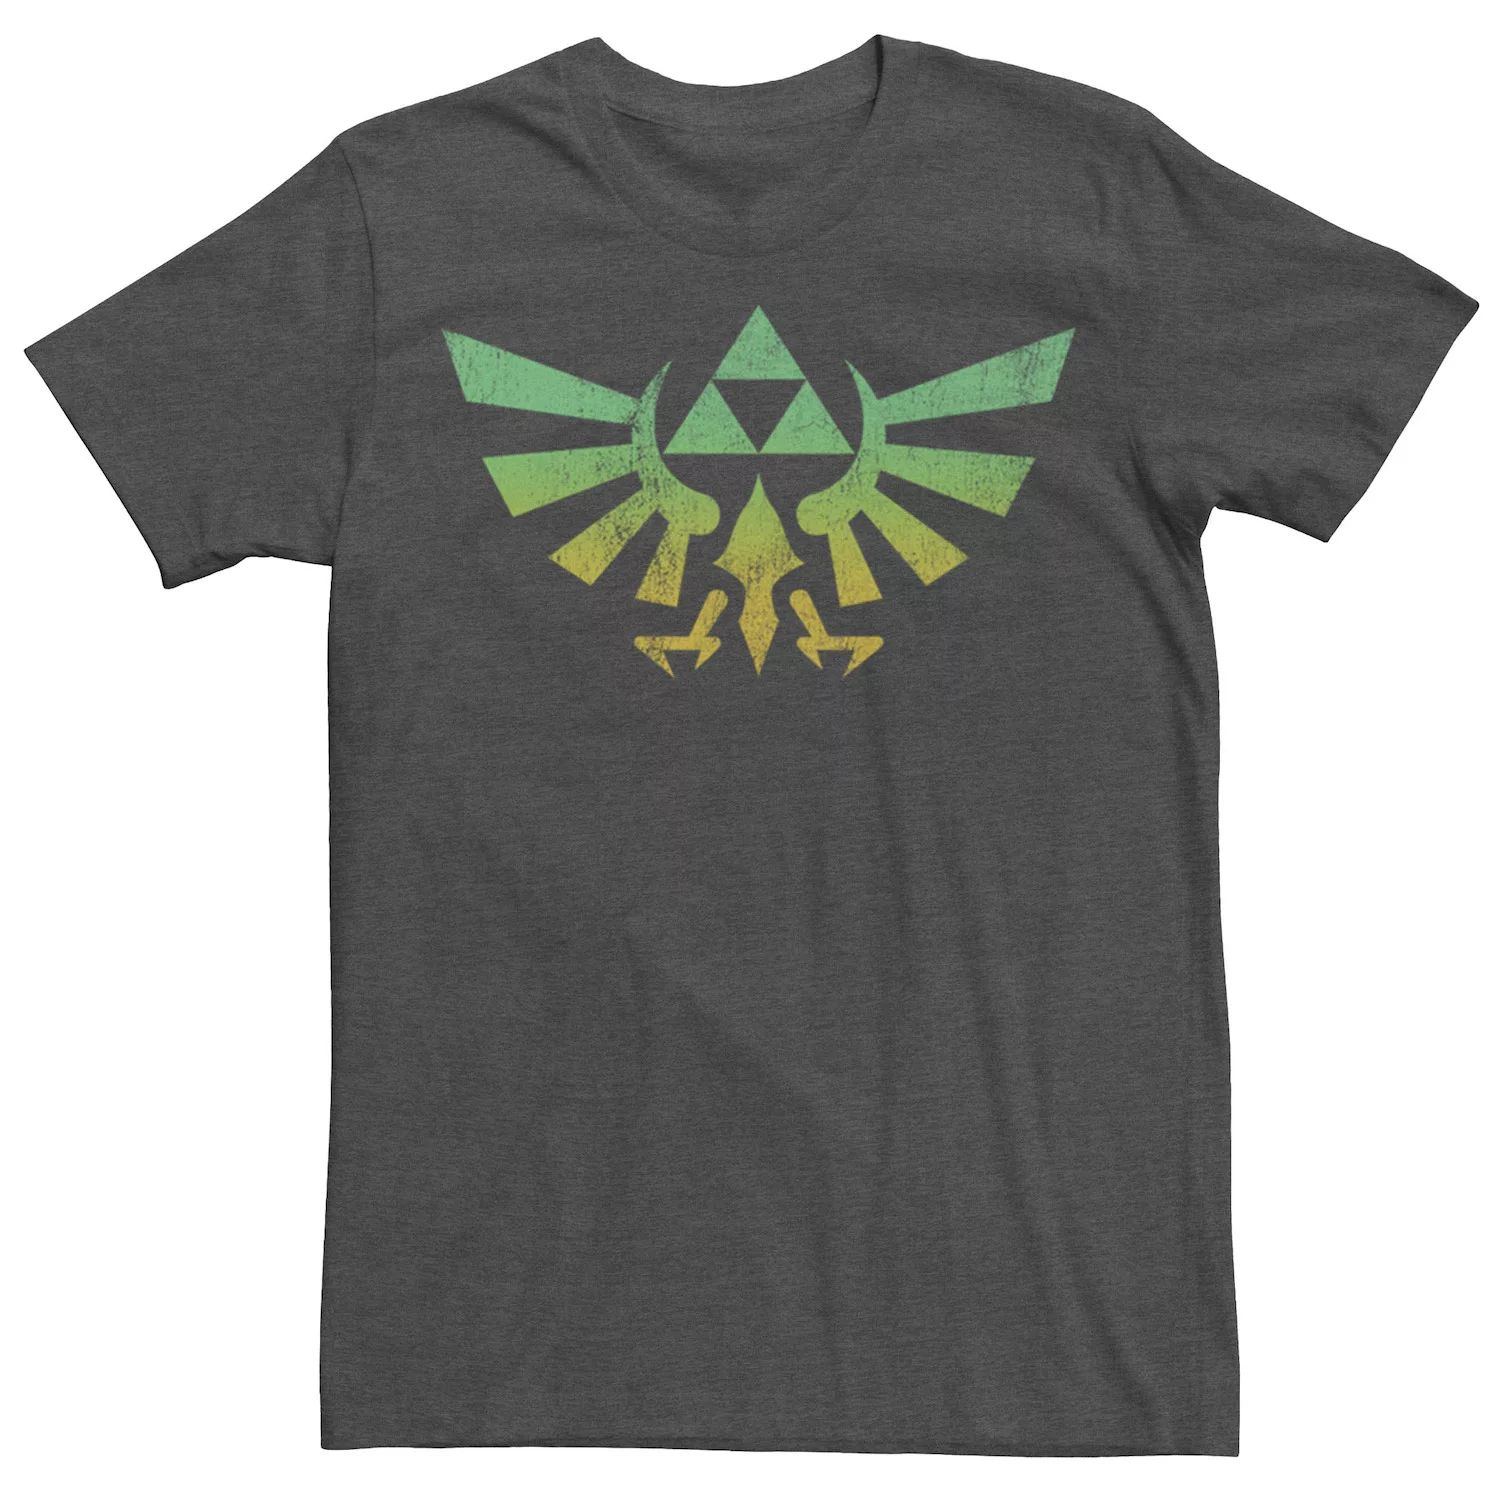 Мужская зеленая выцветшая футболка Nintendo Legend of Zelda Triforce Triforce Licensed Character летняя цветная футболка с рисунком nintendo legend of zelda triforce triforce для мальчиков 8–20 лет licensed character черный